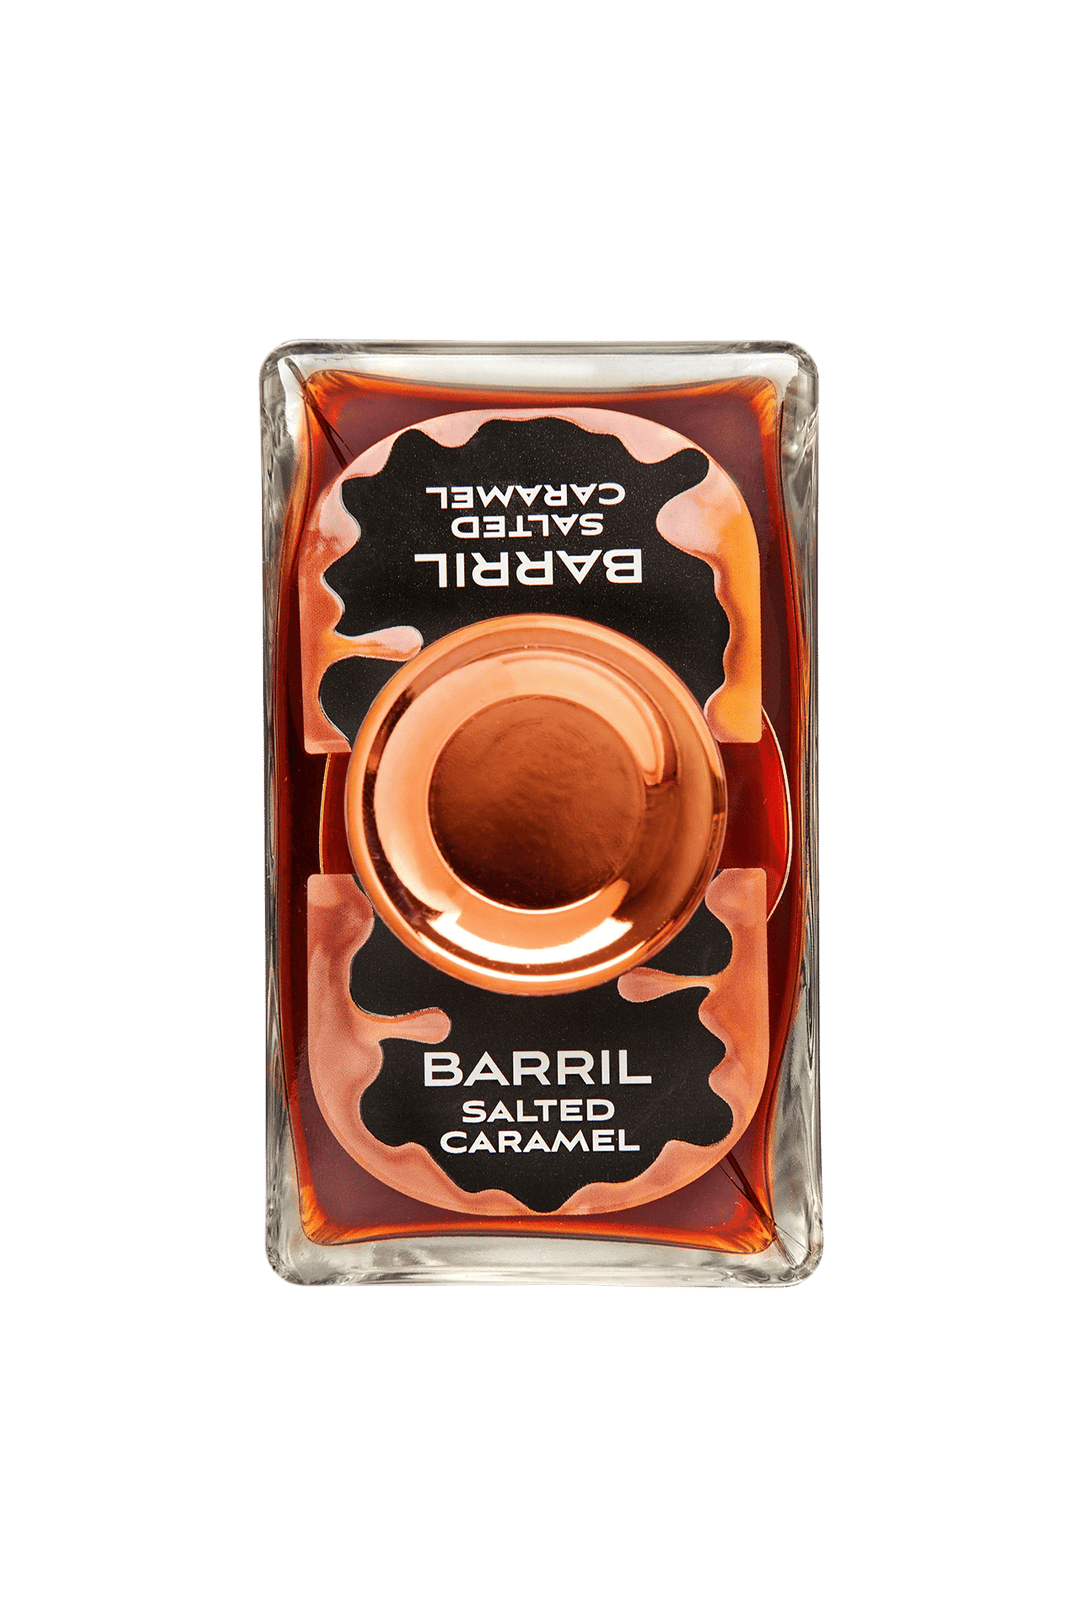 Barril Salted Caramel Cask Aged Rum